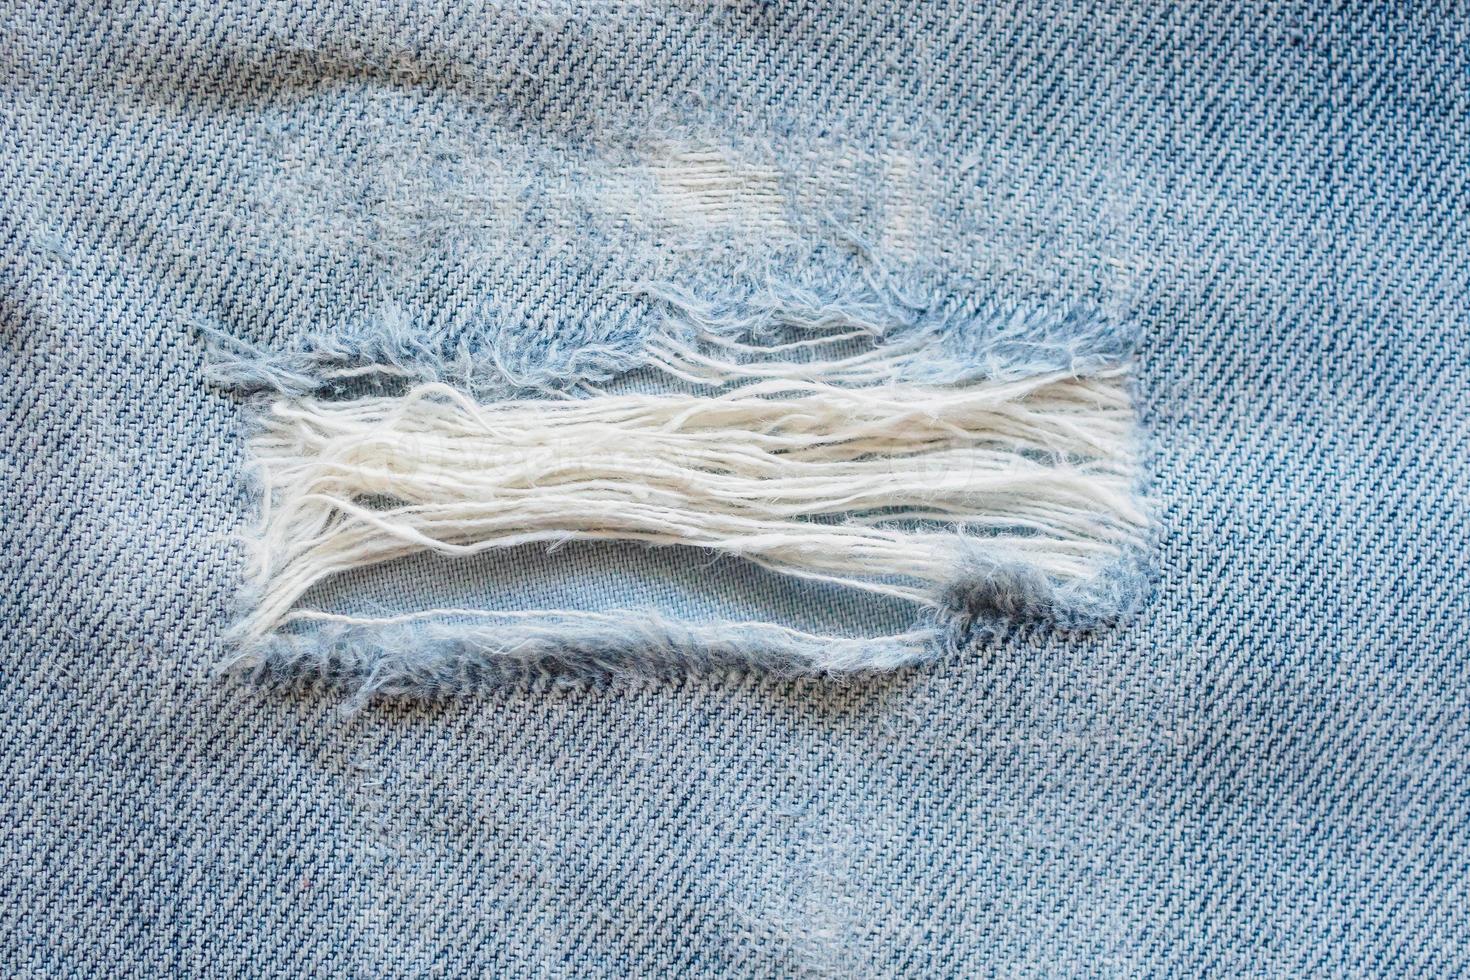 Blue denim jeans texture pattern background photo